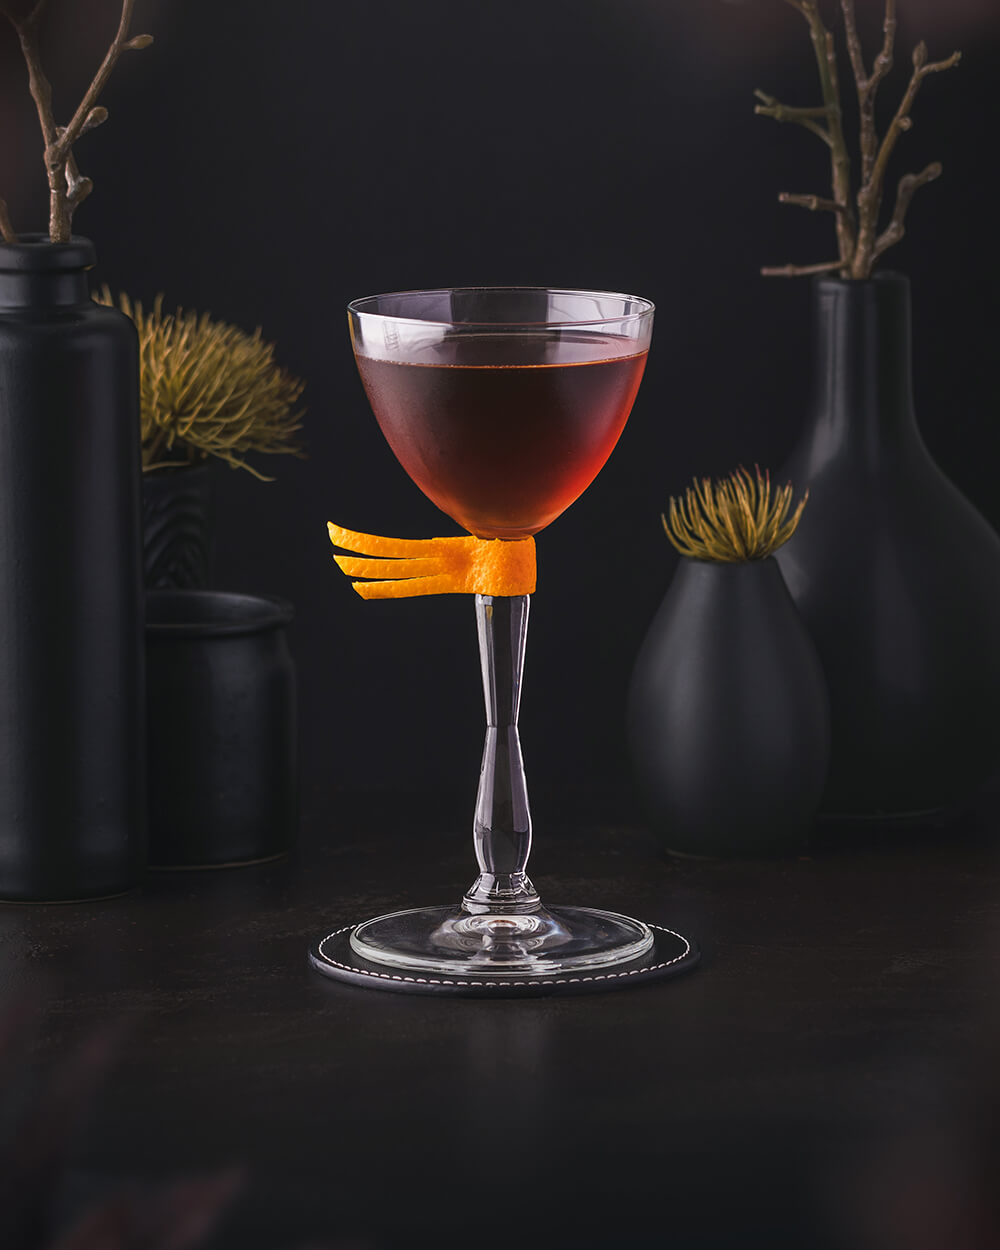 La Viña Cocktail - Deep red drink with rye whiskey, amaro nonino, cream sherry and orange bitters.